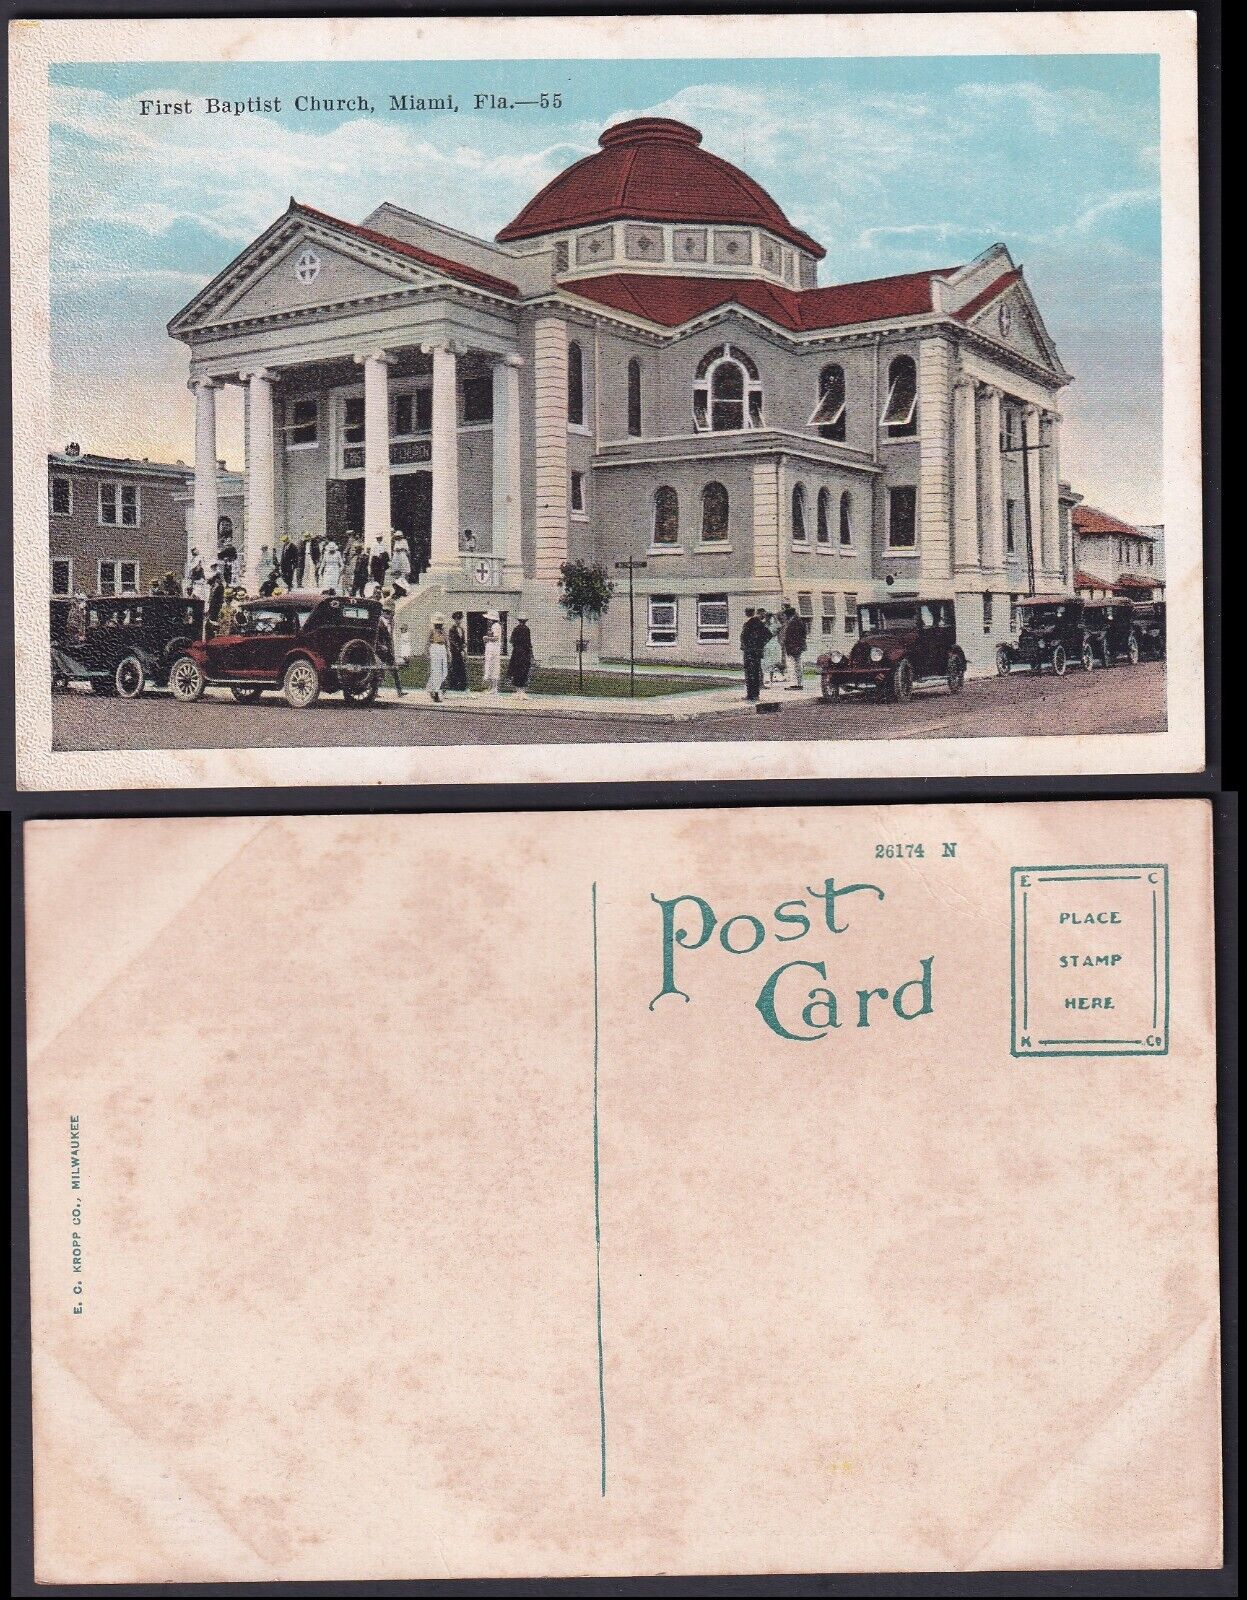 Postcard of First Baptist Church, Miami, Florida